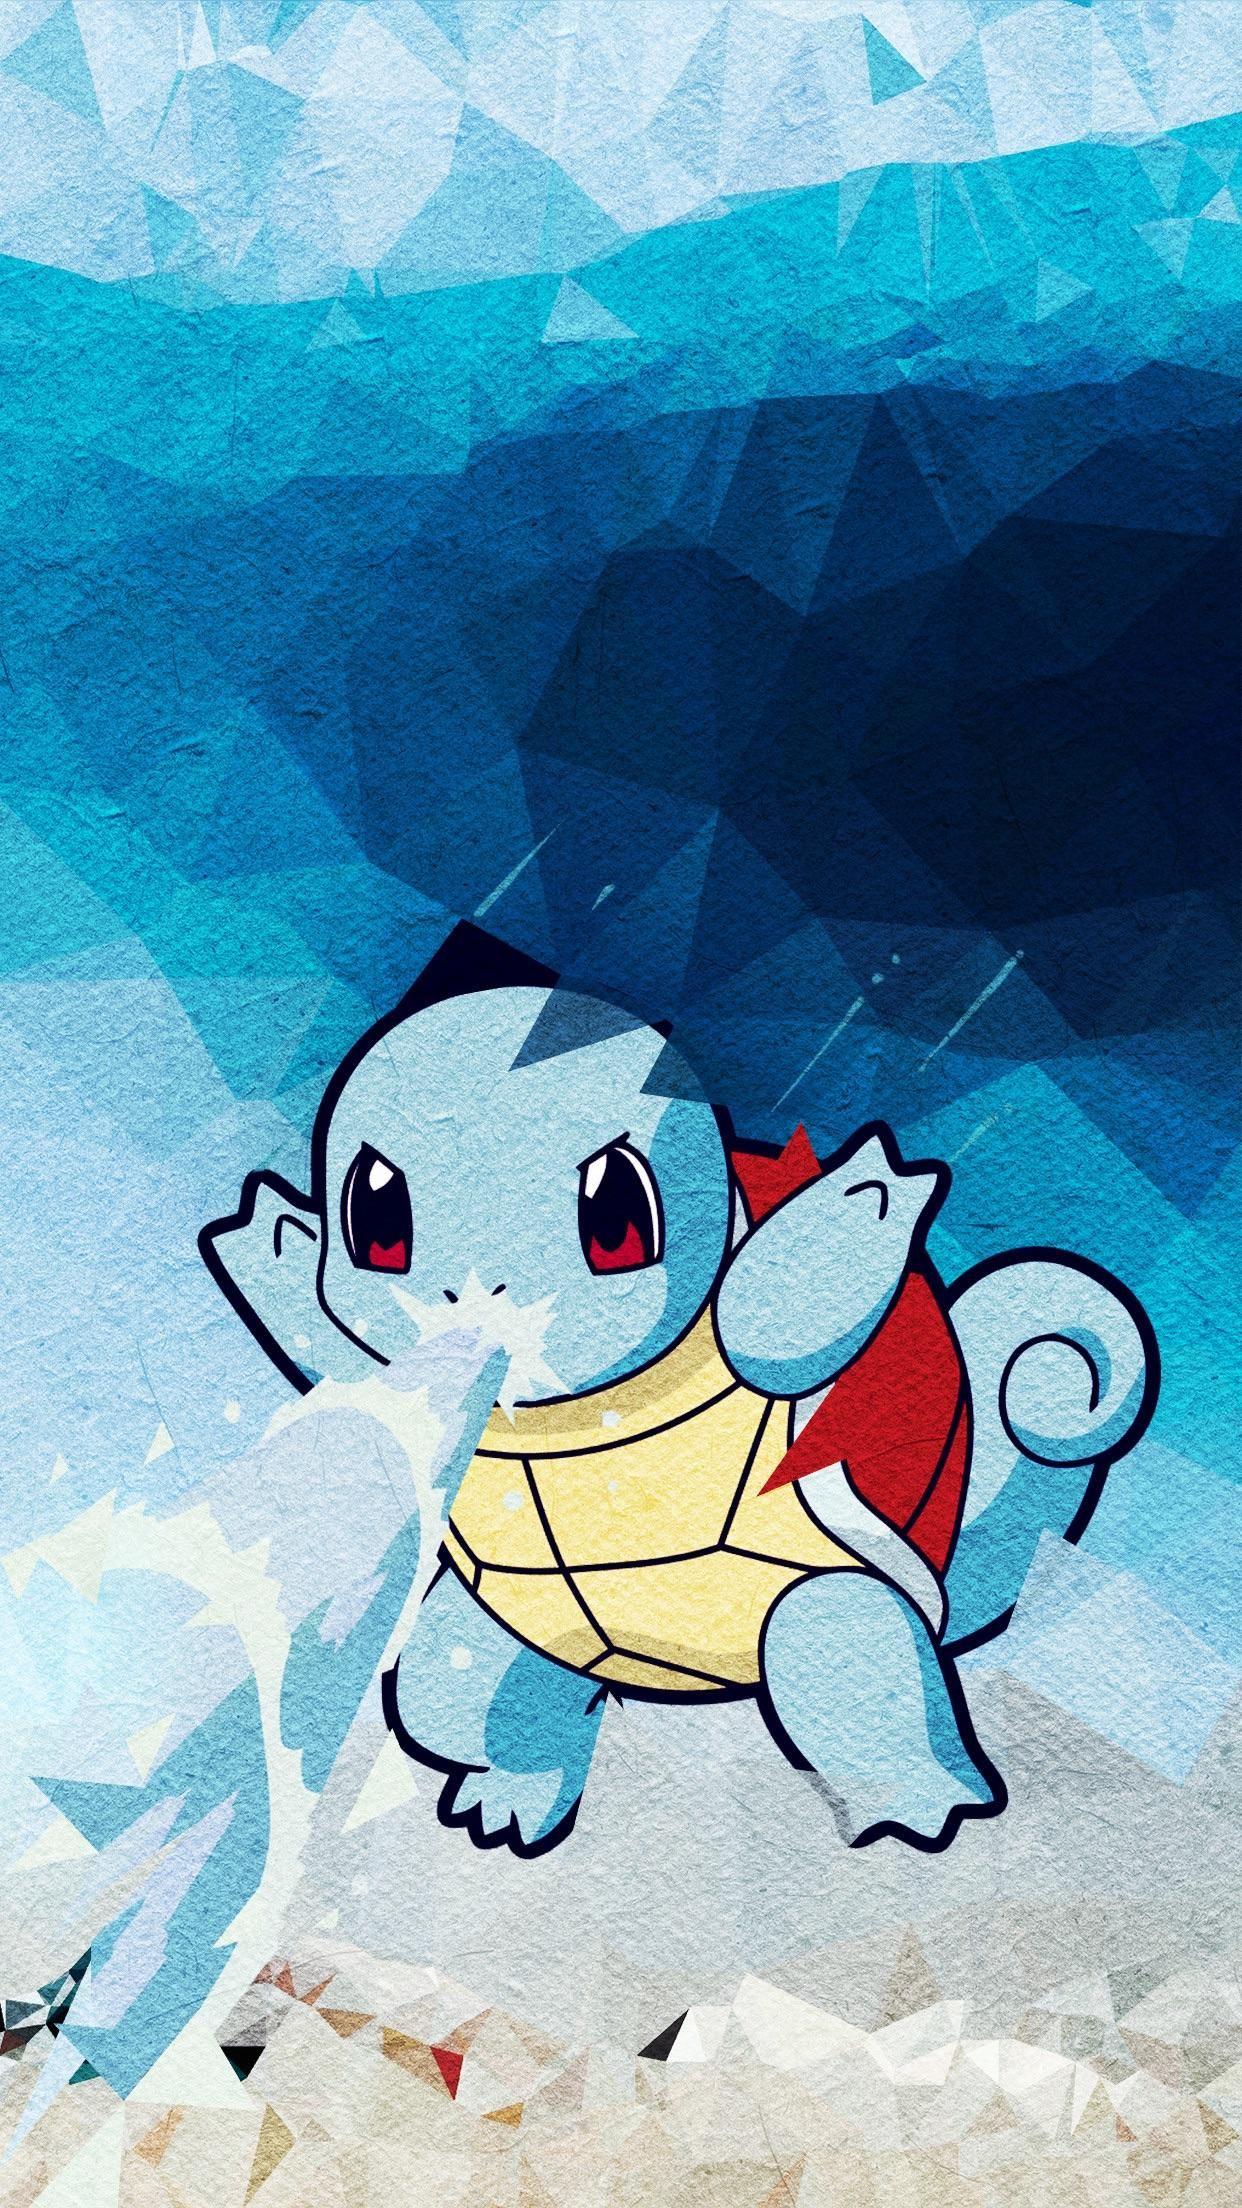 Squirtle Wallpaper. Cute pokemon wallpaper, Pokemon, Pokemon poster